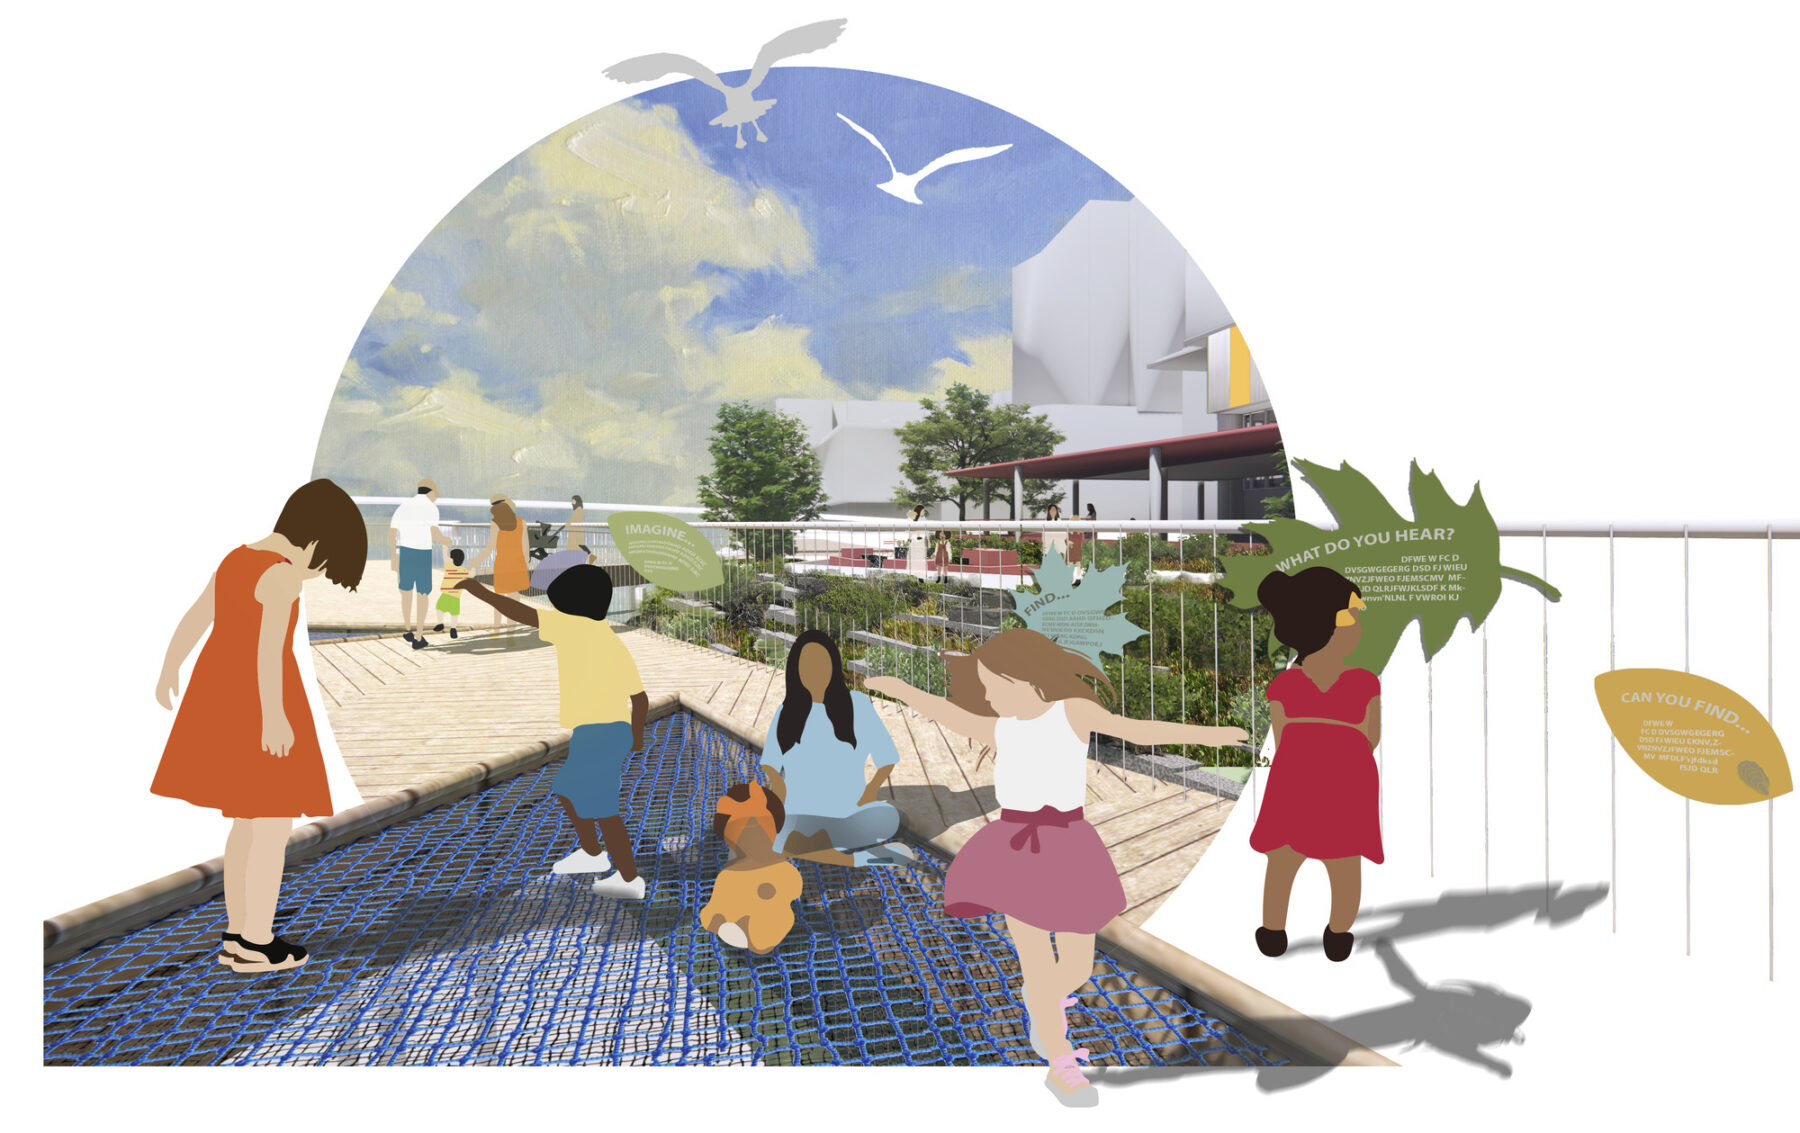 rendering of children's wharf and water hammocks